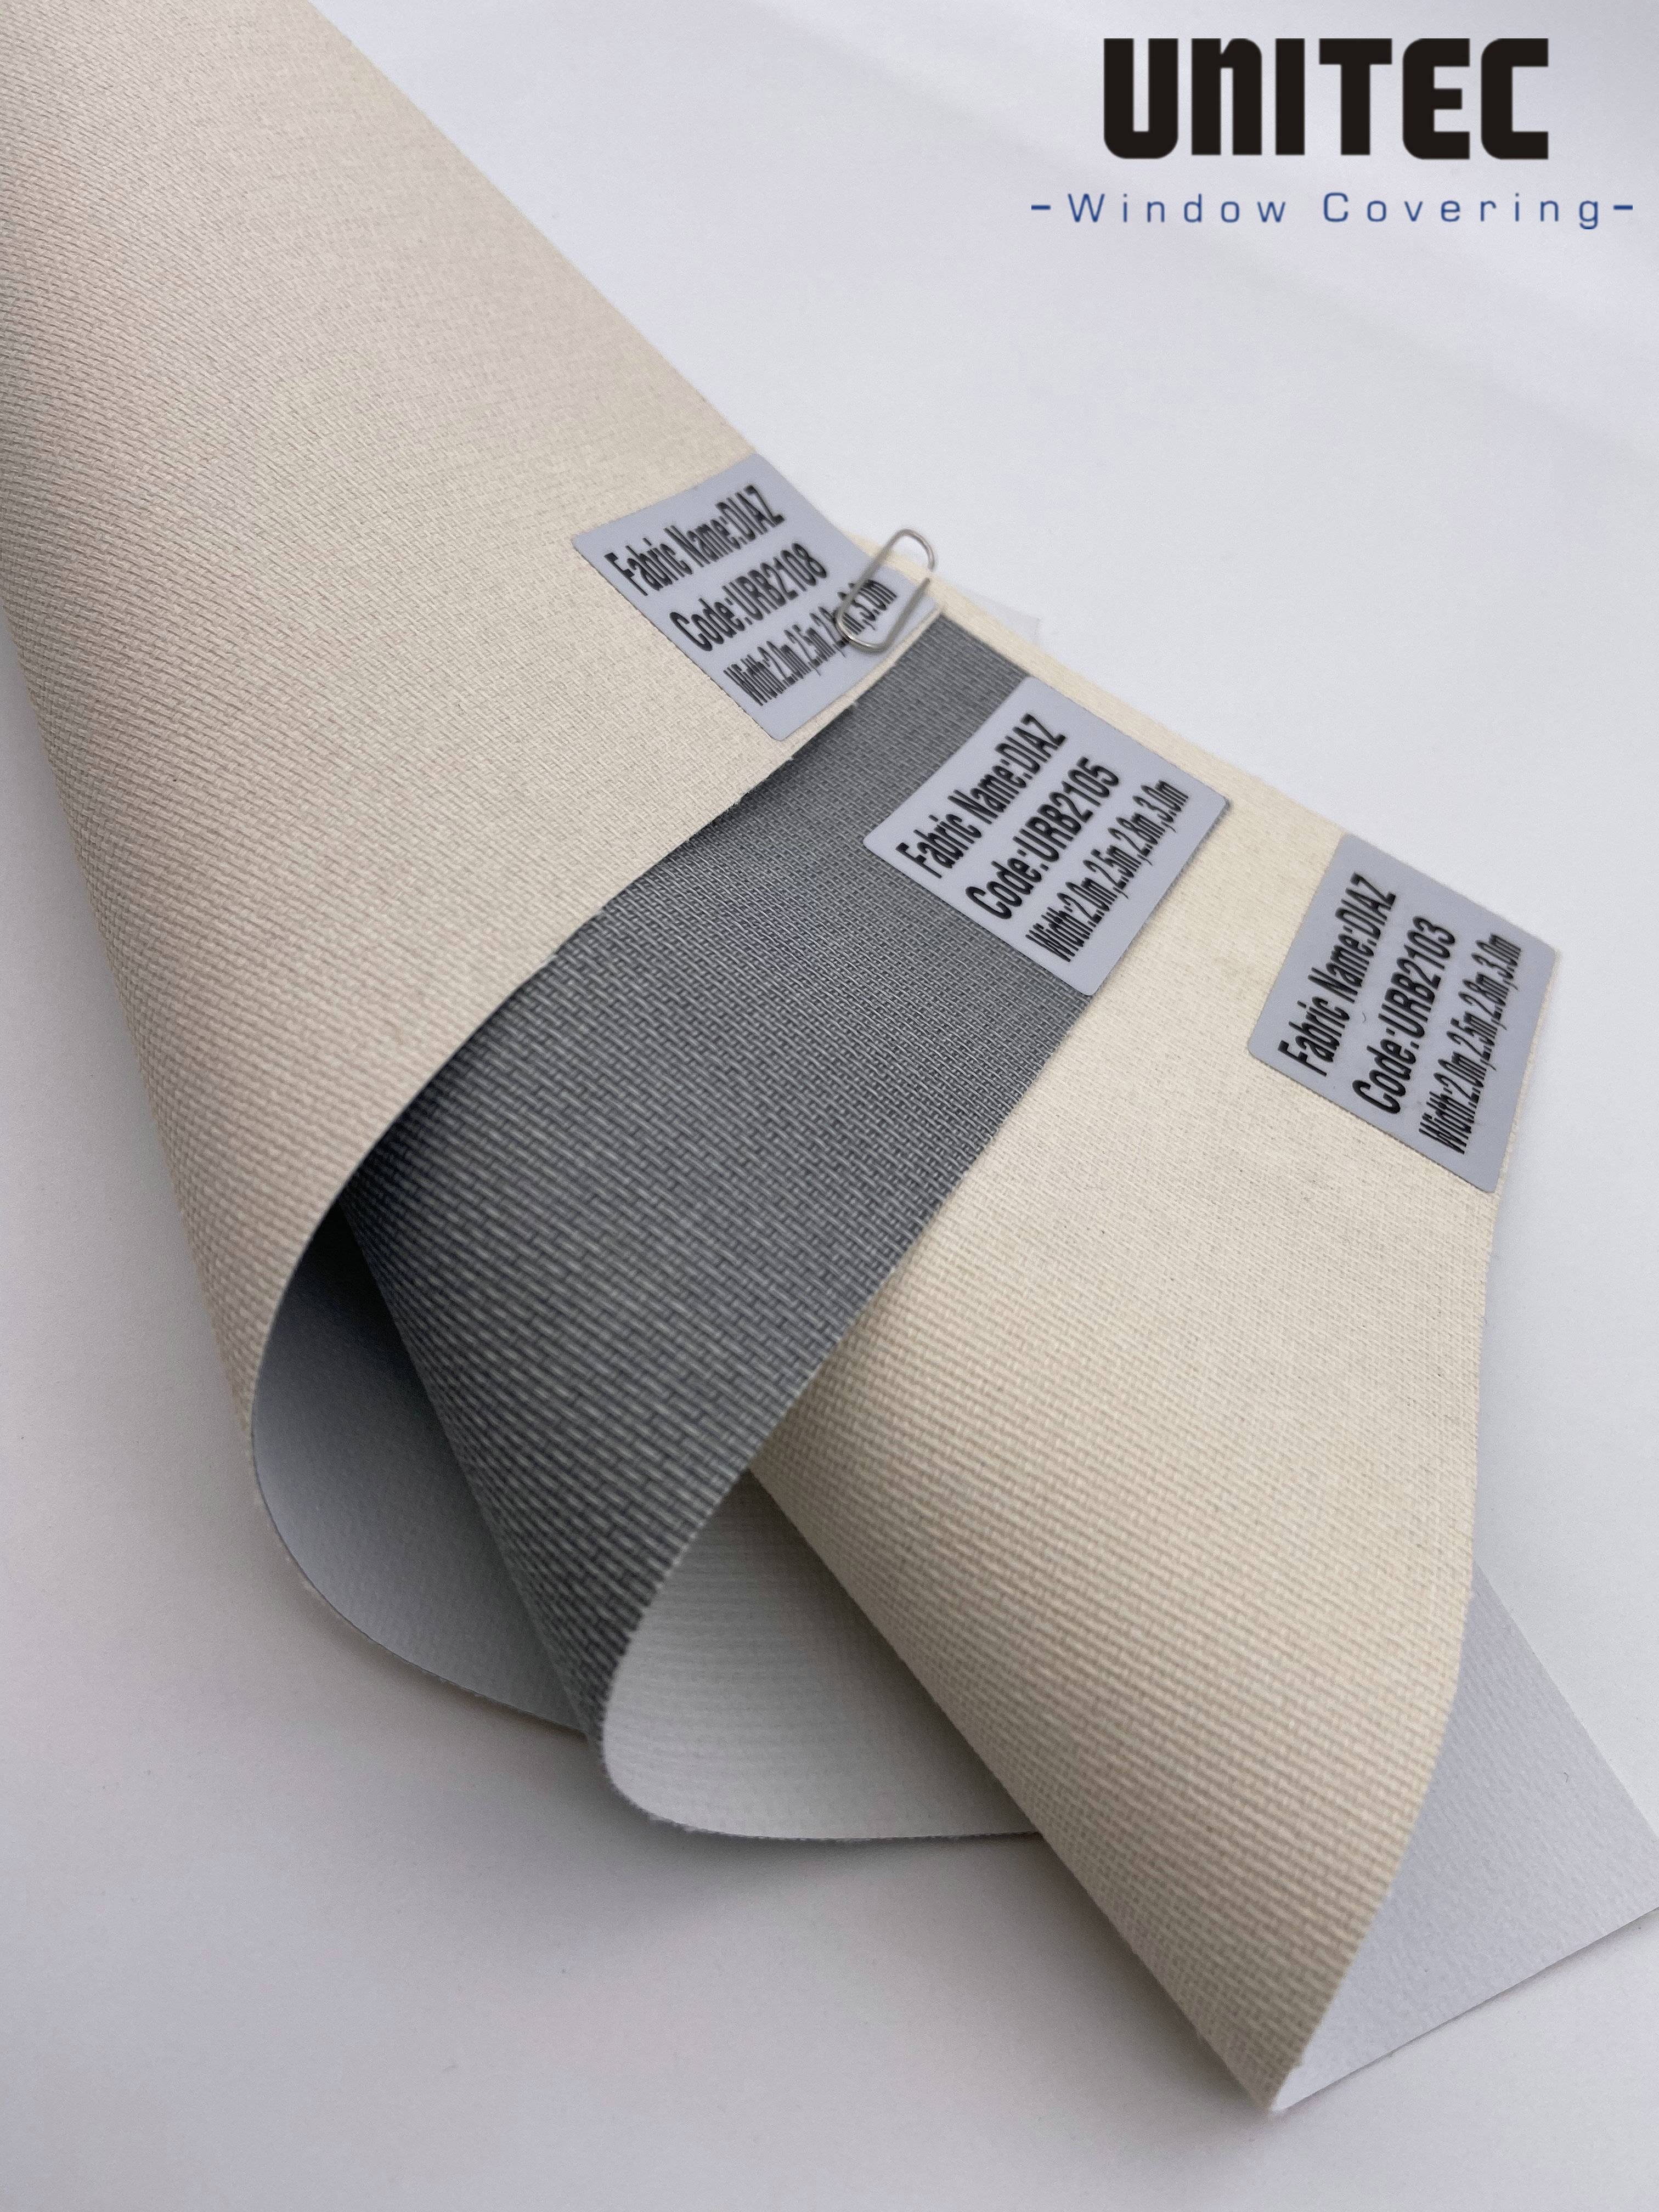 URB2108 Beige Plantation Shutters UNITEC Manufacturer Roller Blinds Fabric Featured Image